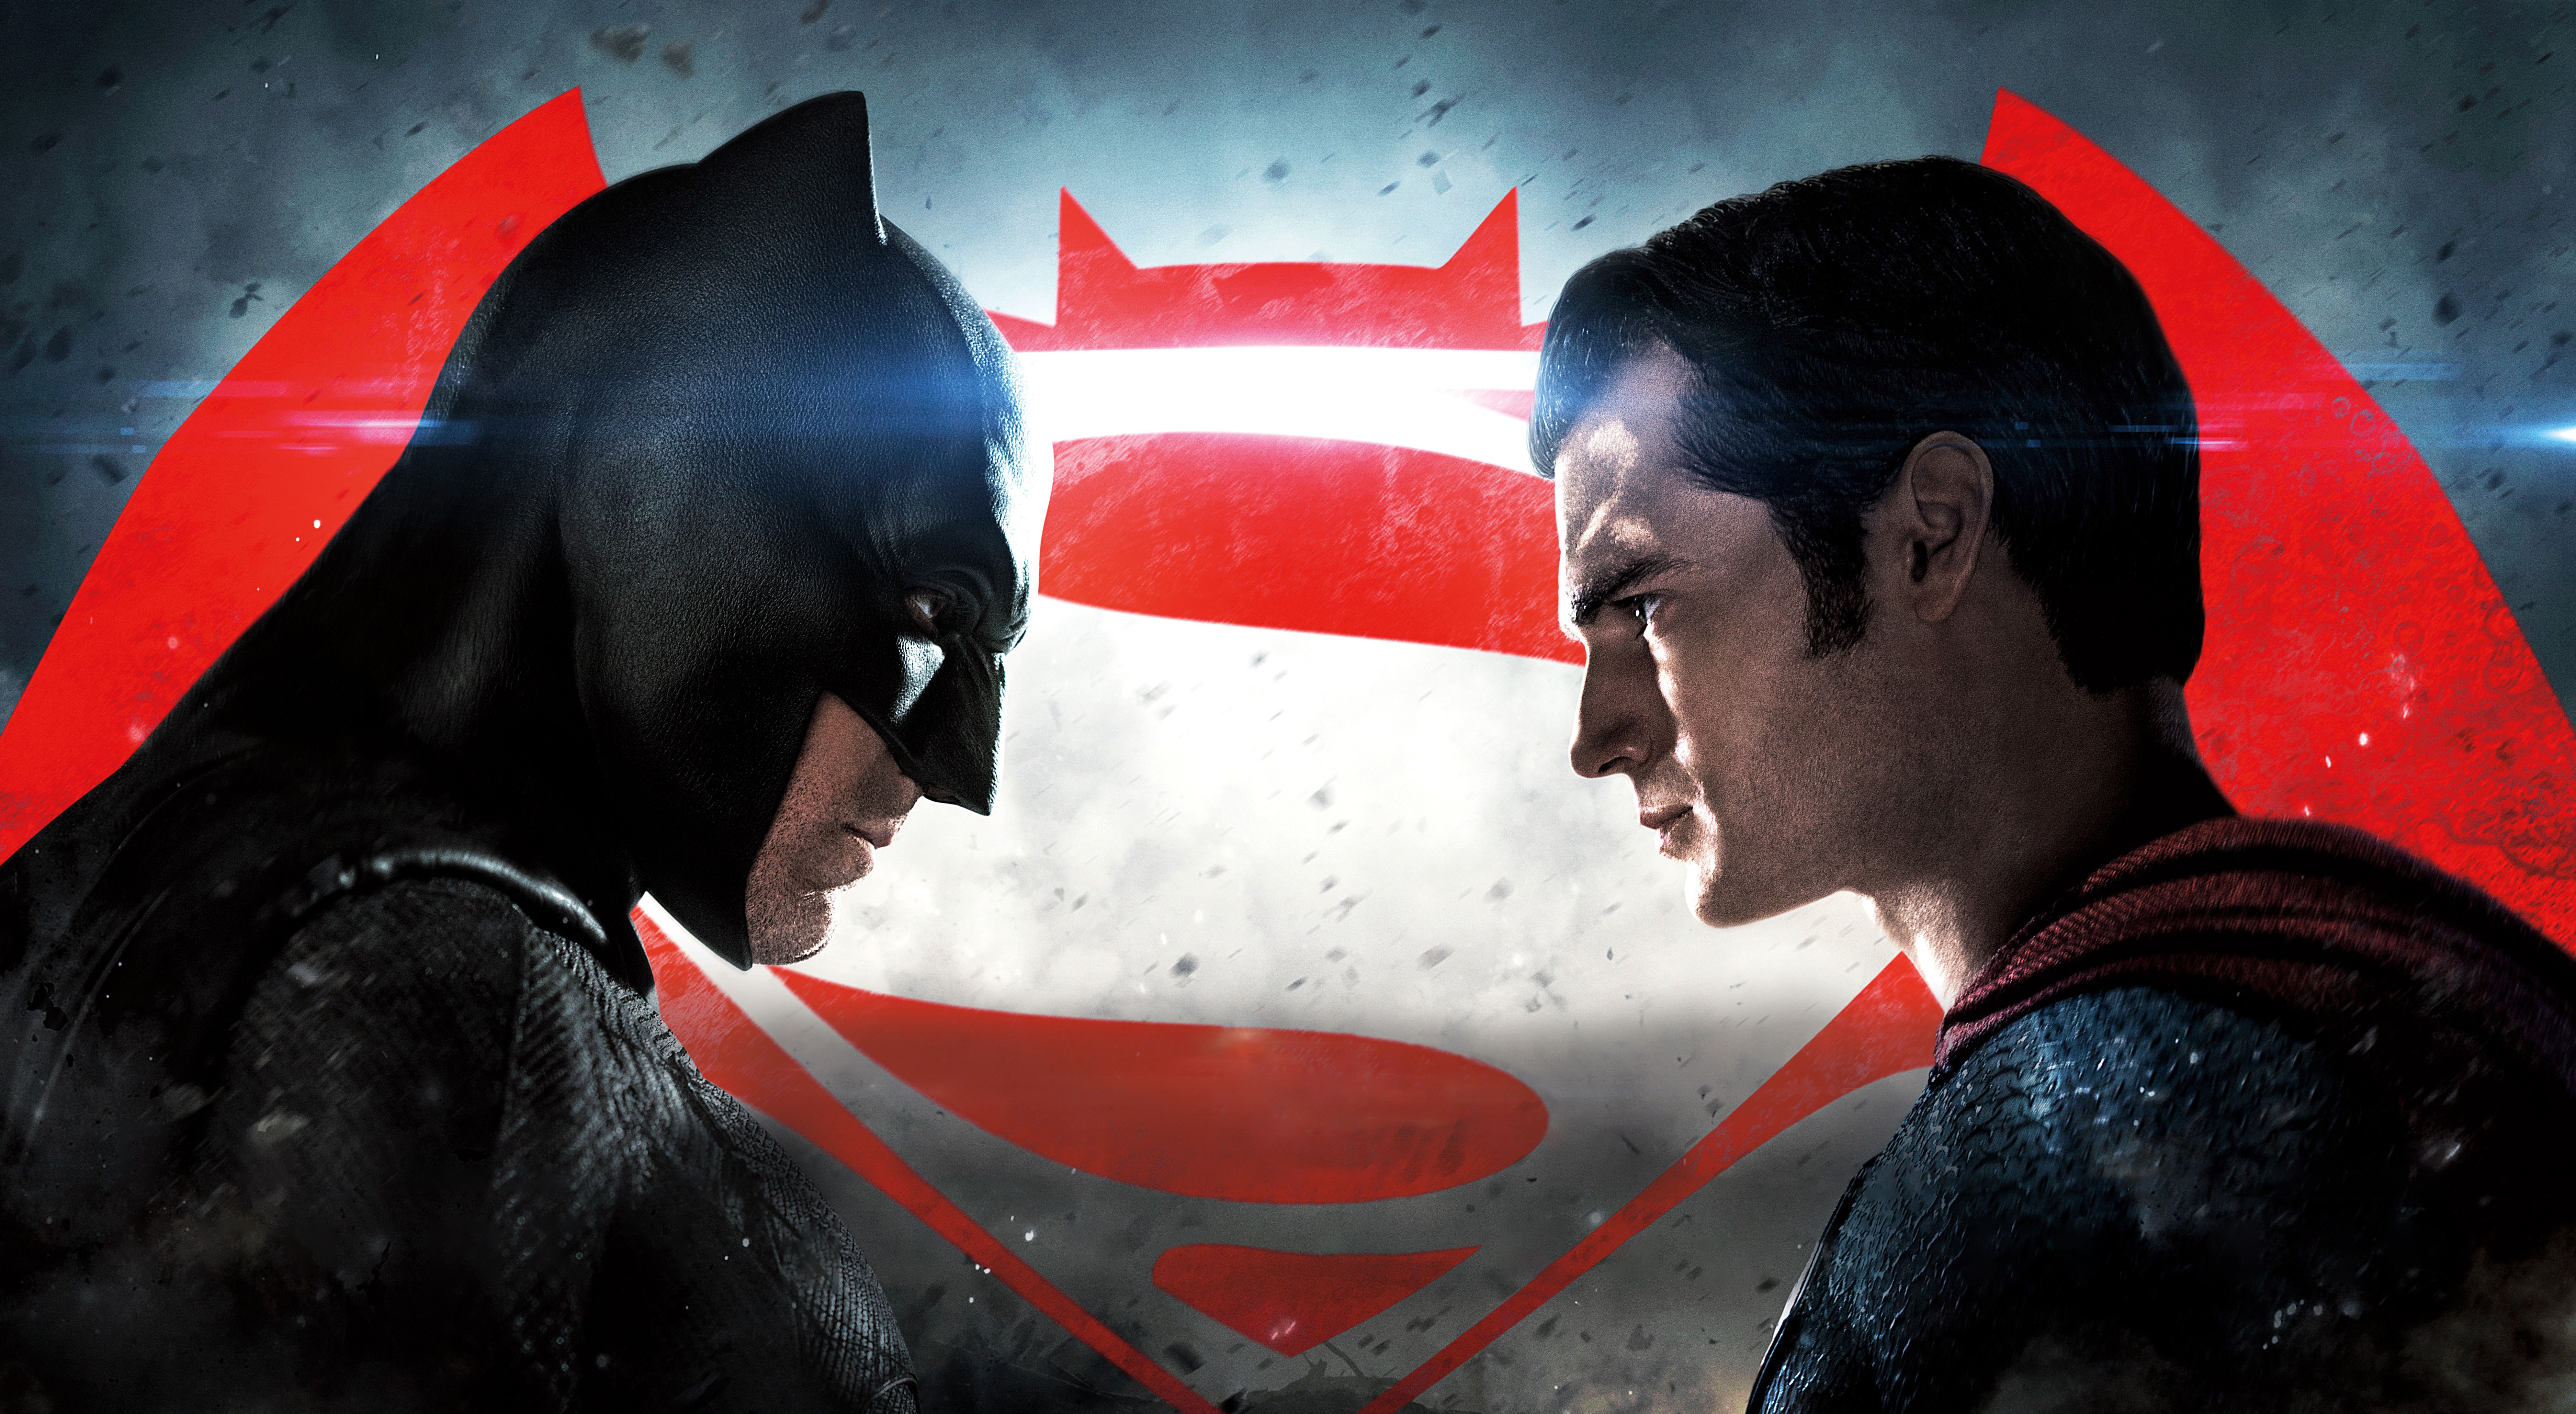 New BATMAN V SUPERMAN Ultimate Edition Featurettes Explore The Film's Fights